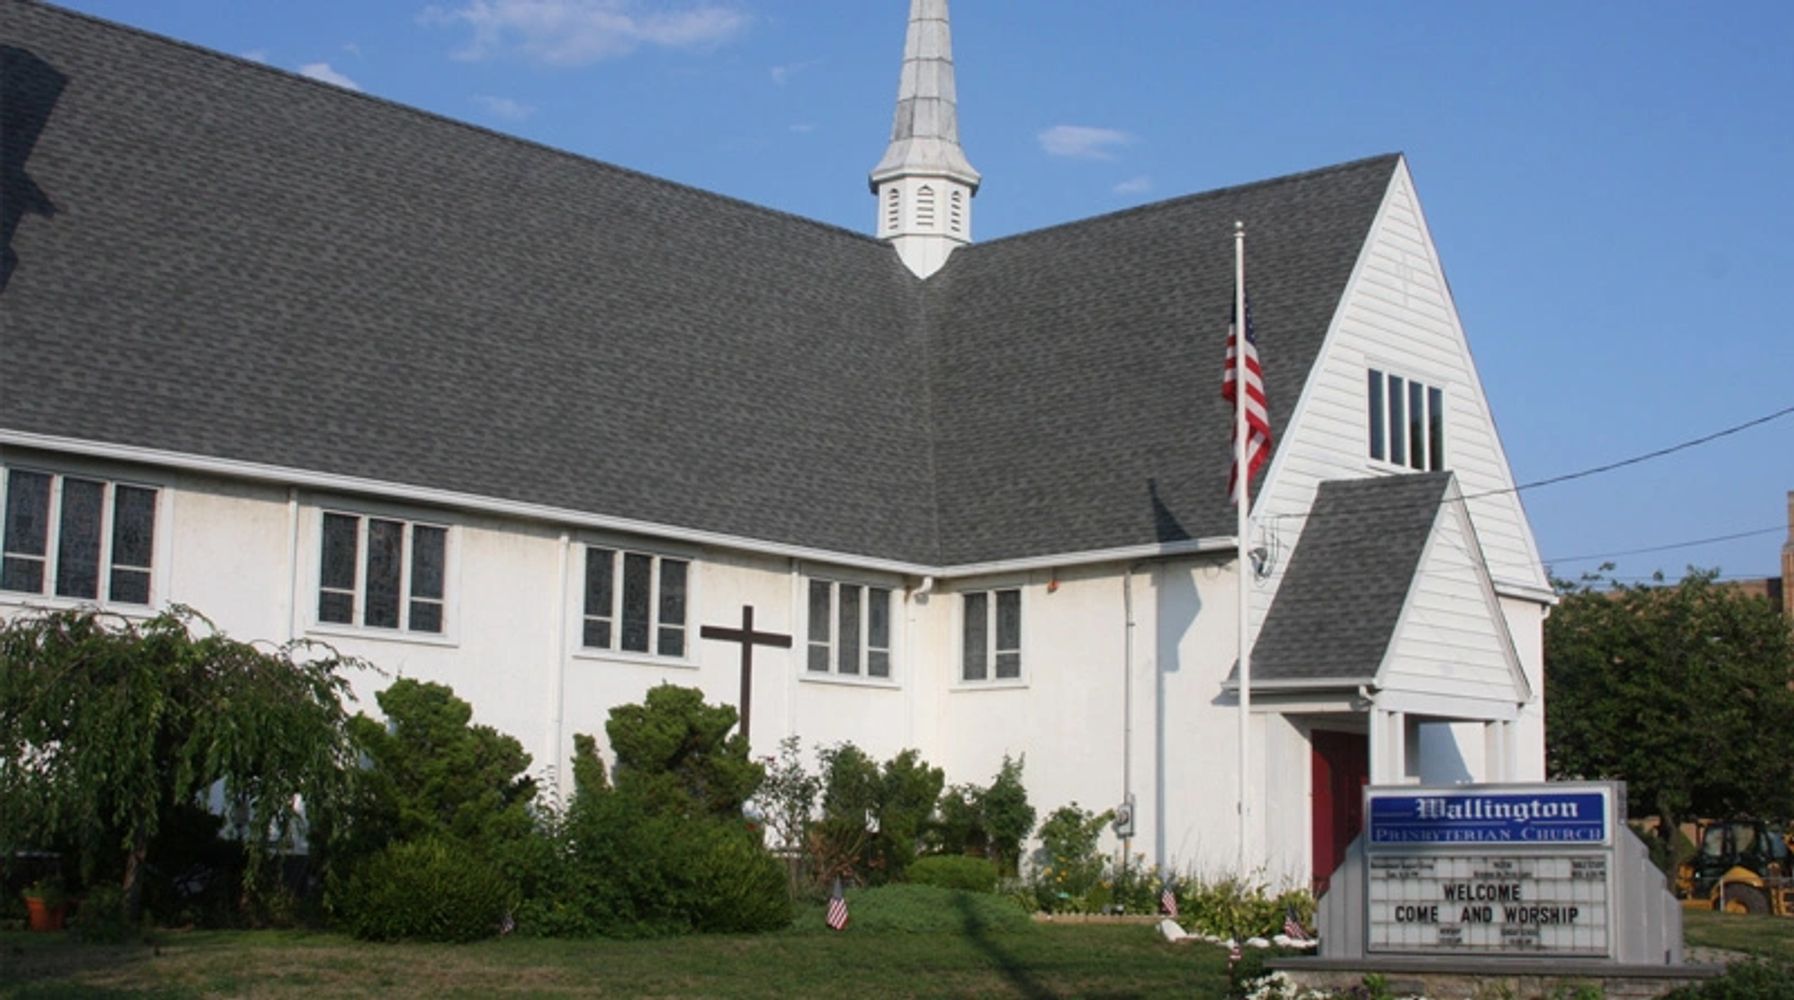 Wallington Presbyterian Church in Wallington, NJ